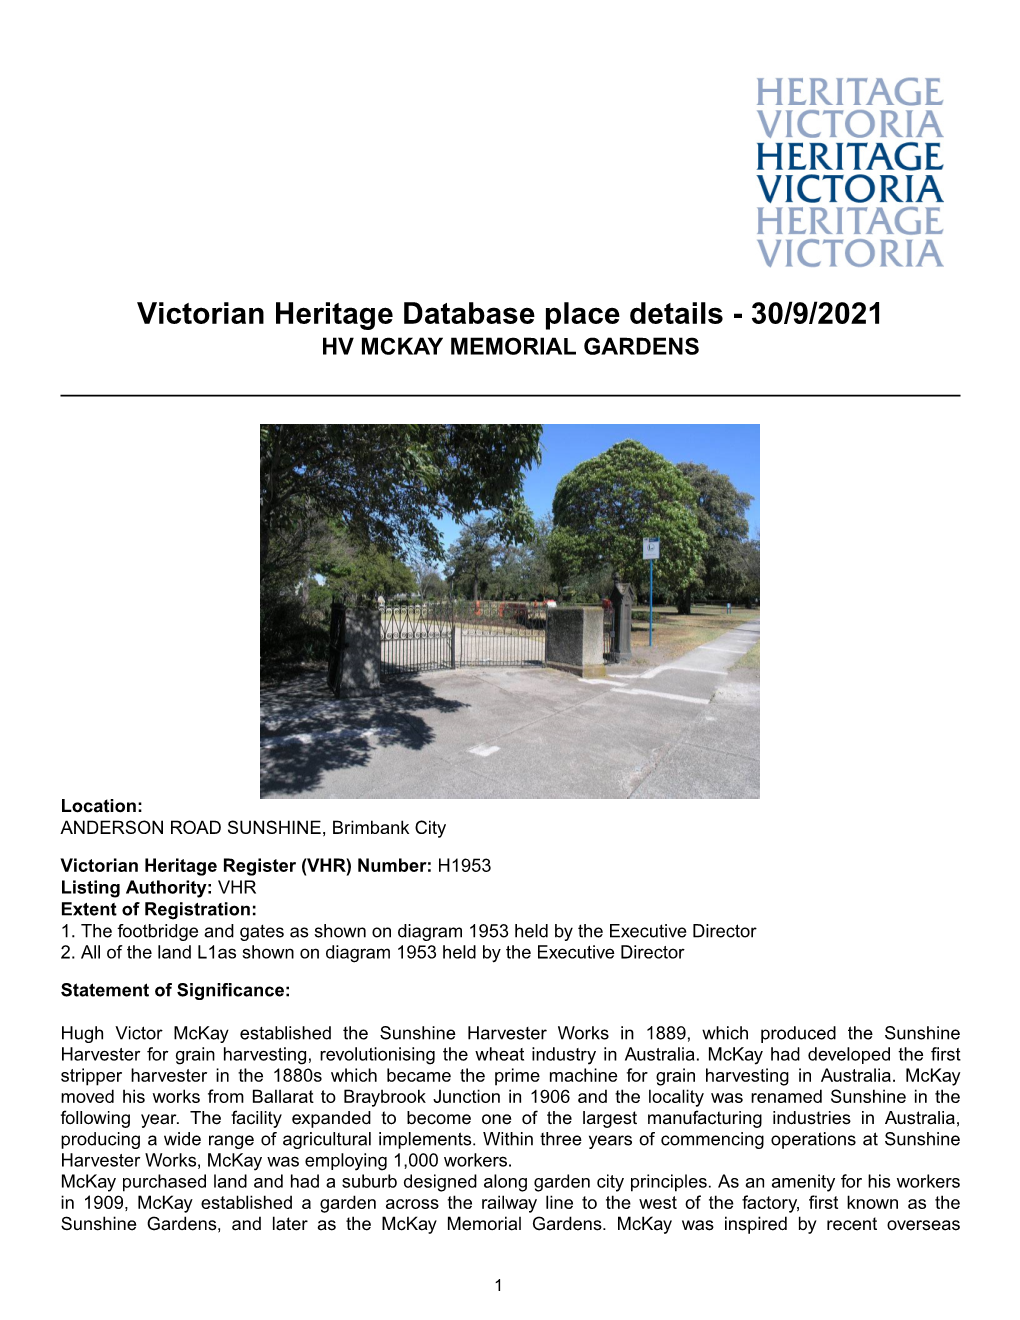 Victorian Heritage Database Place Details - 30/9/2021 HV MCKAY MEMORIAL GARDENS